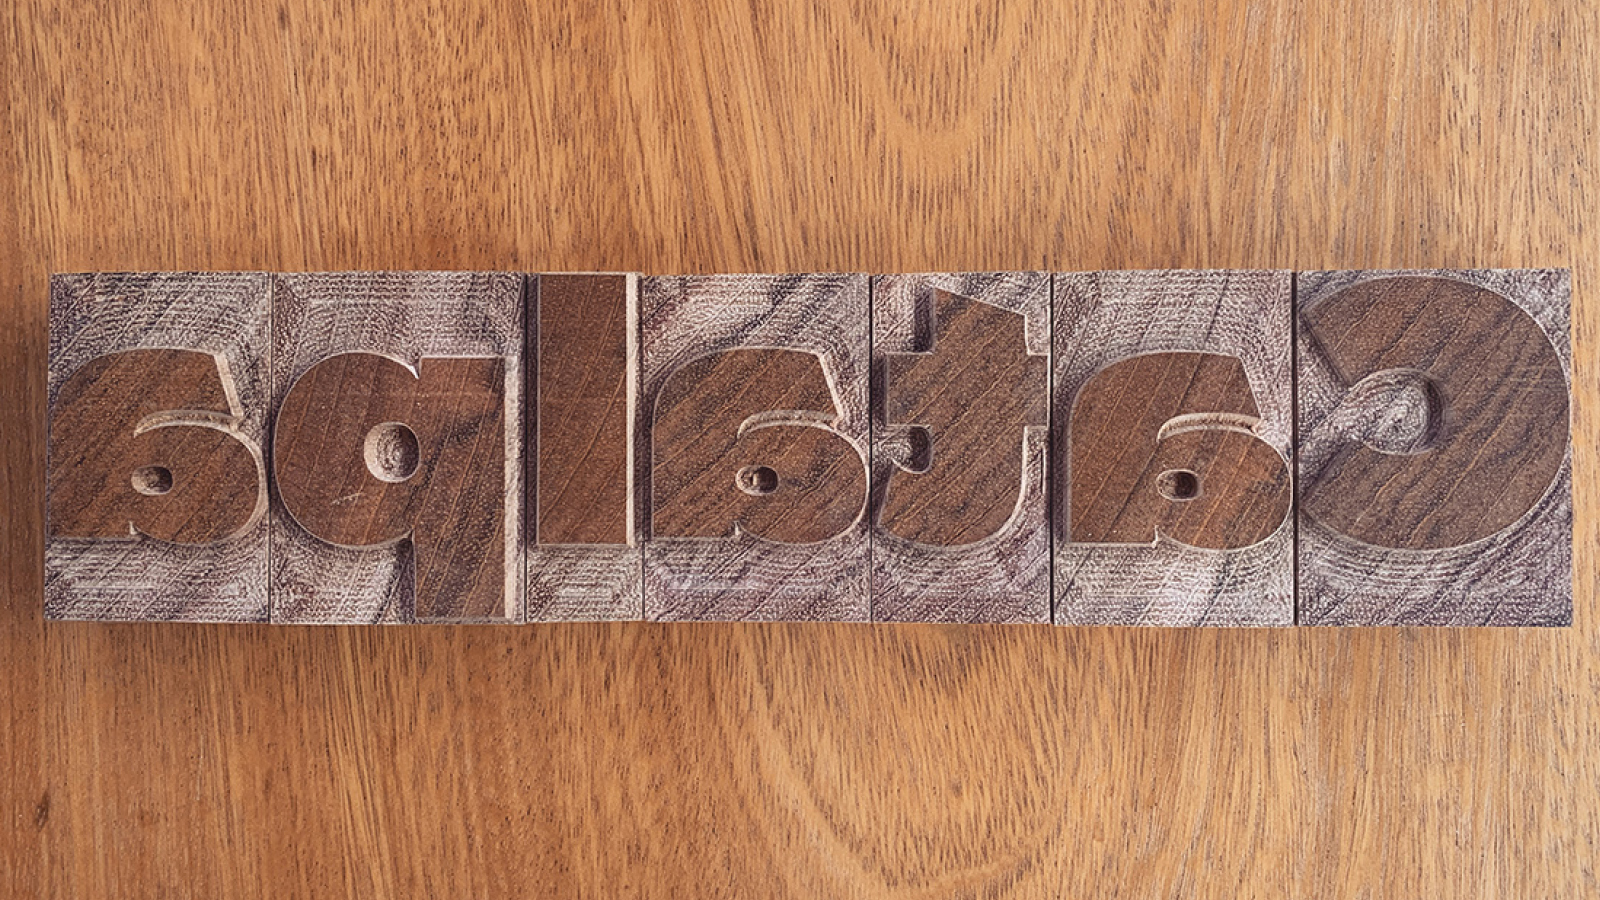 Catalpa wood type